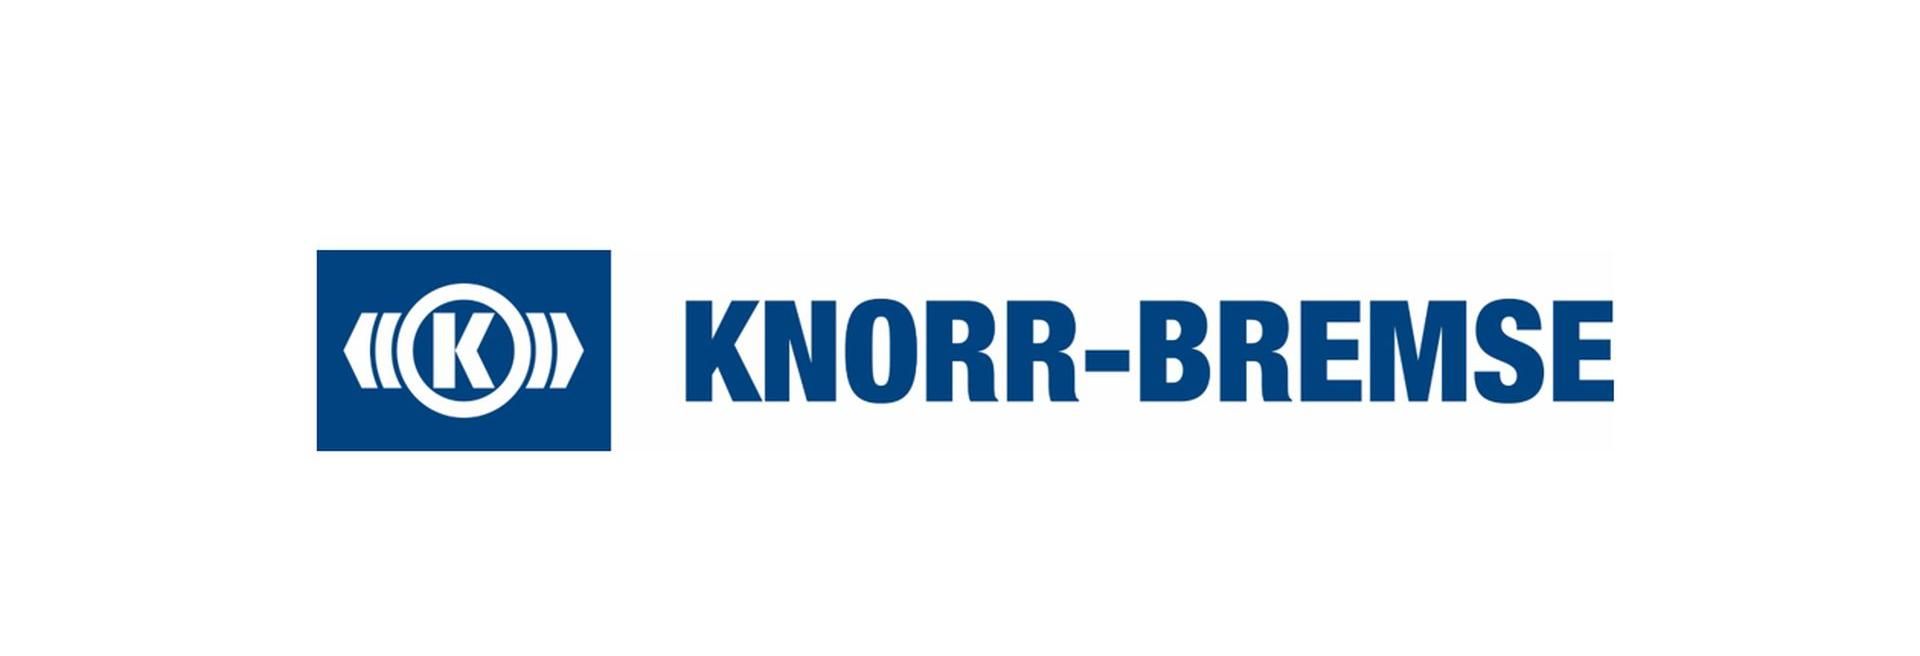 Knorr-Bremse, a manufacturer of brake systems, strengthens in Budapest